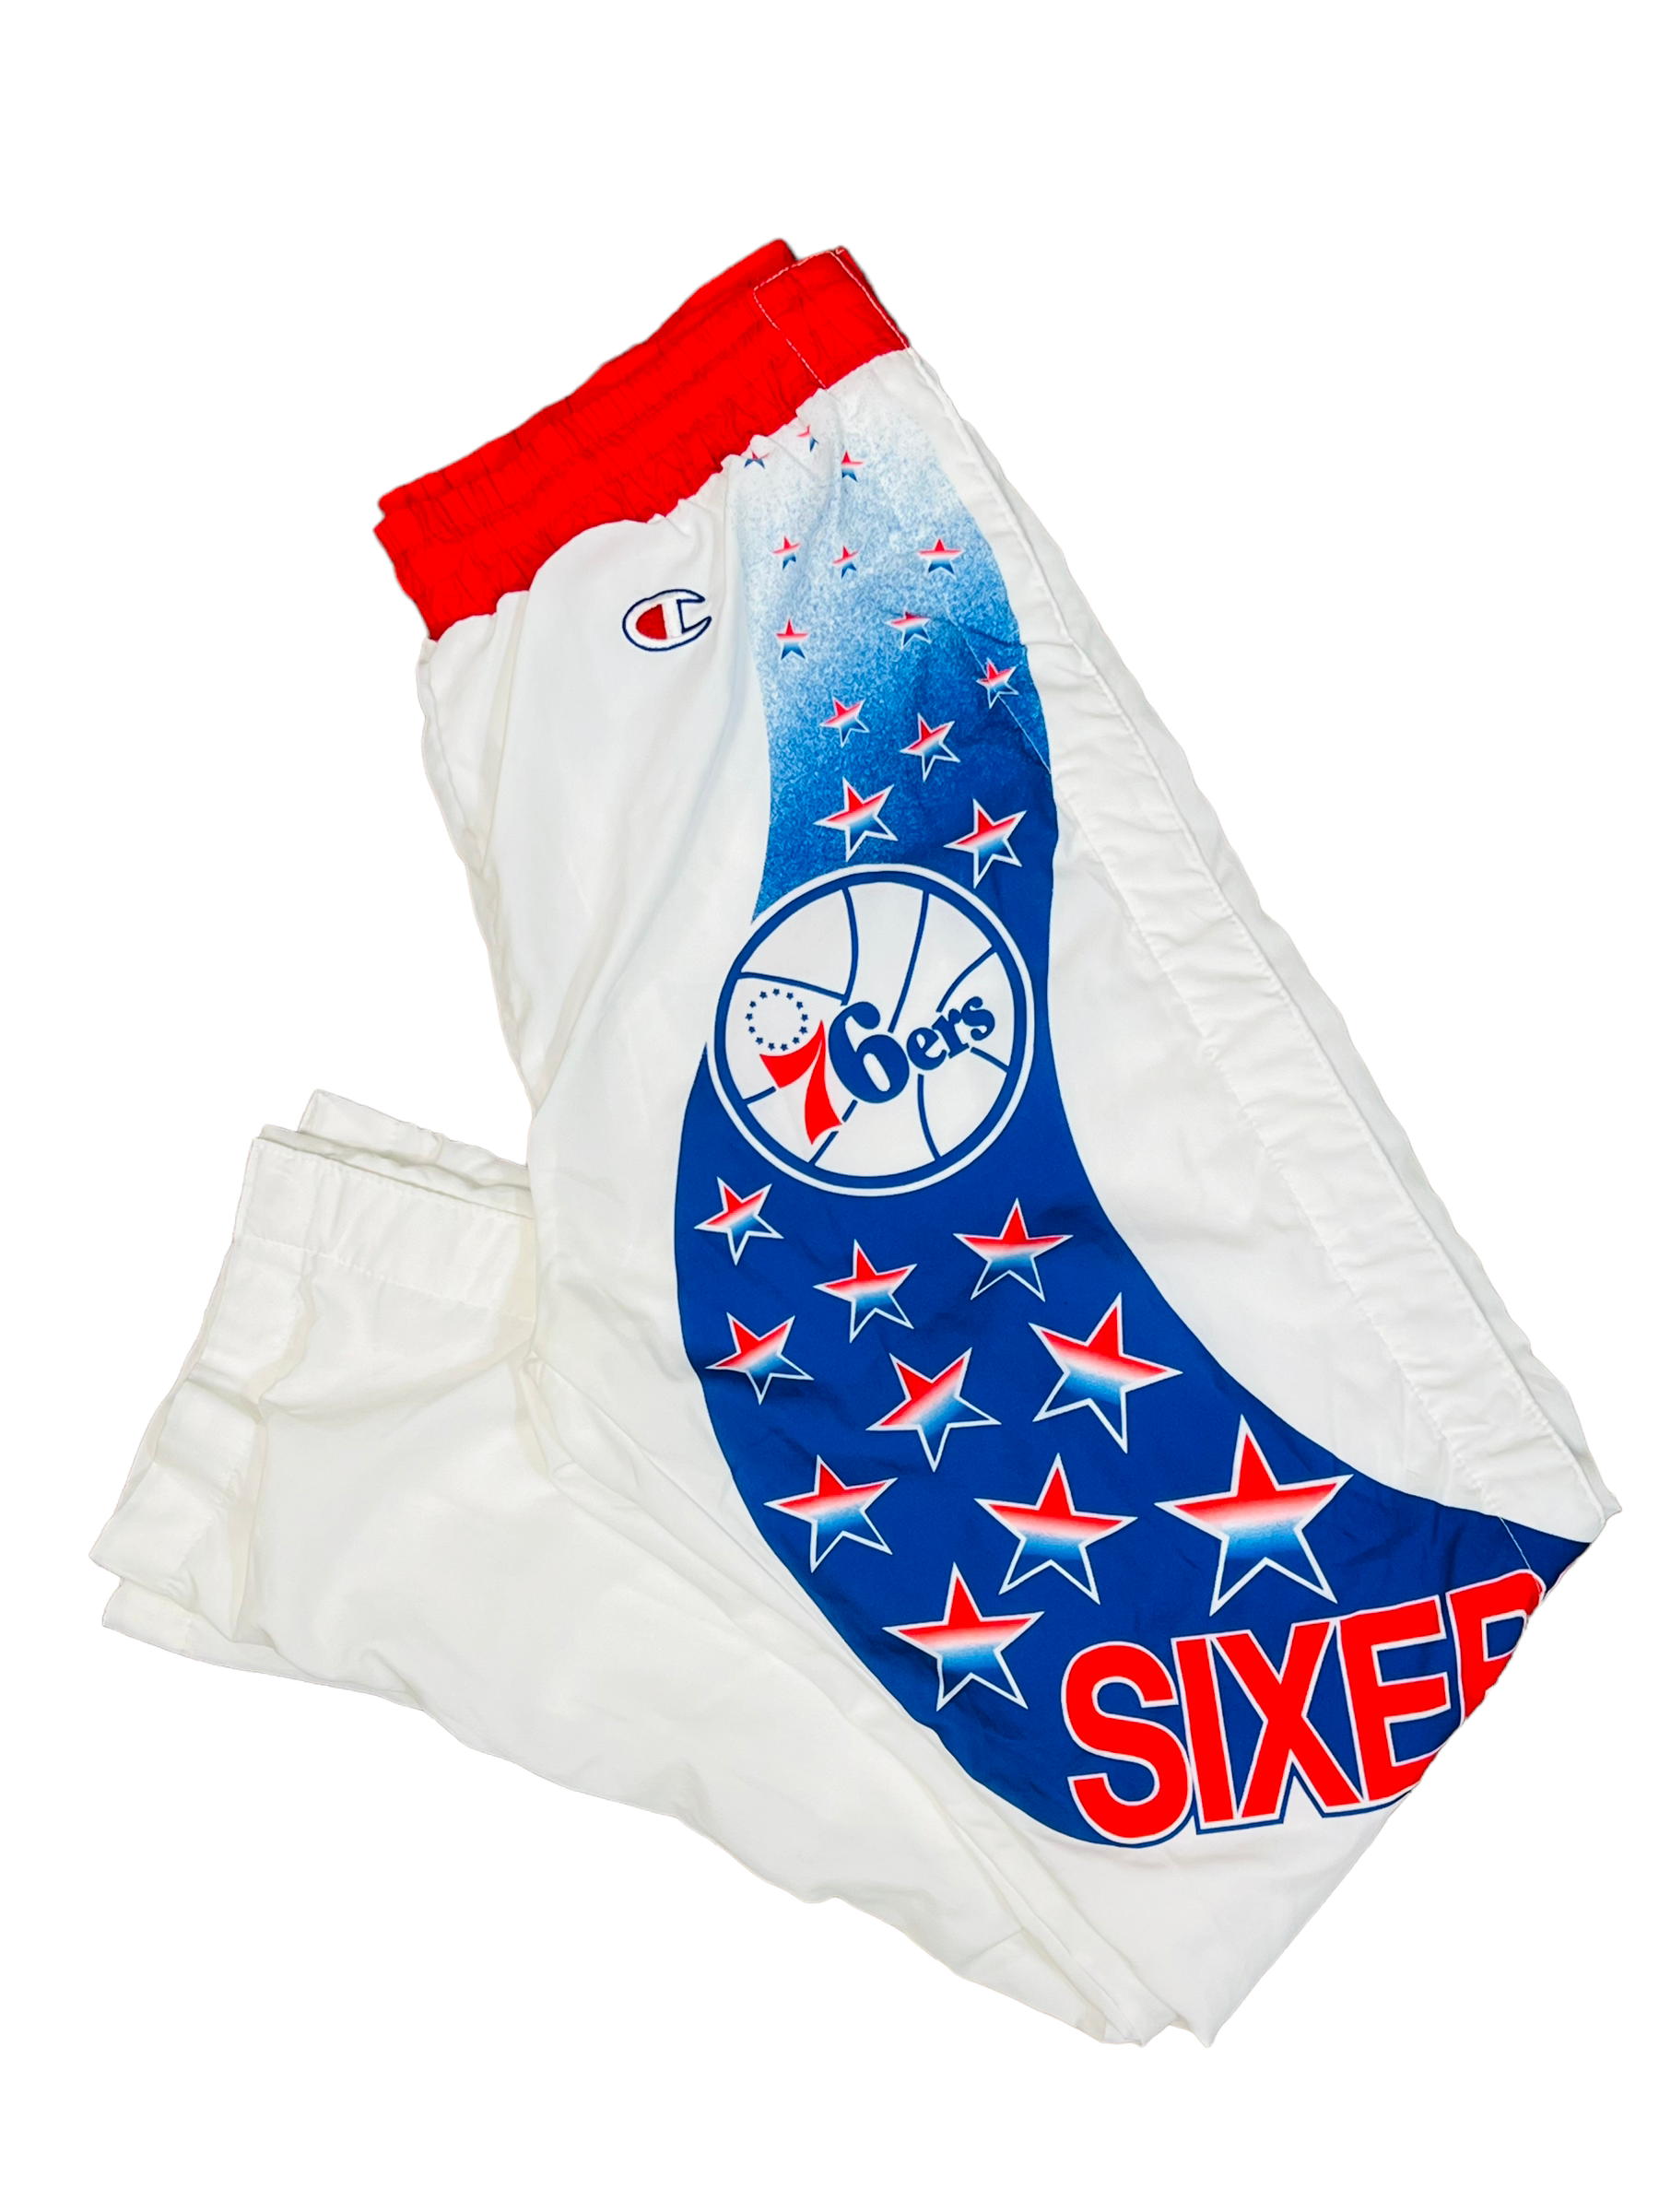 HolySport Philadelphia 76ers Vintage 90s Champion Warm Up Basketball Pants - Hardwood Classics - Red, Blue & White - Men's Size Small 